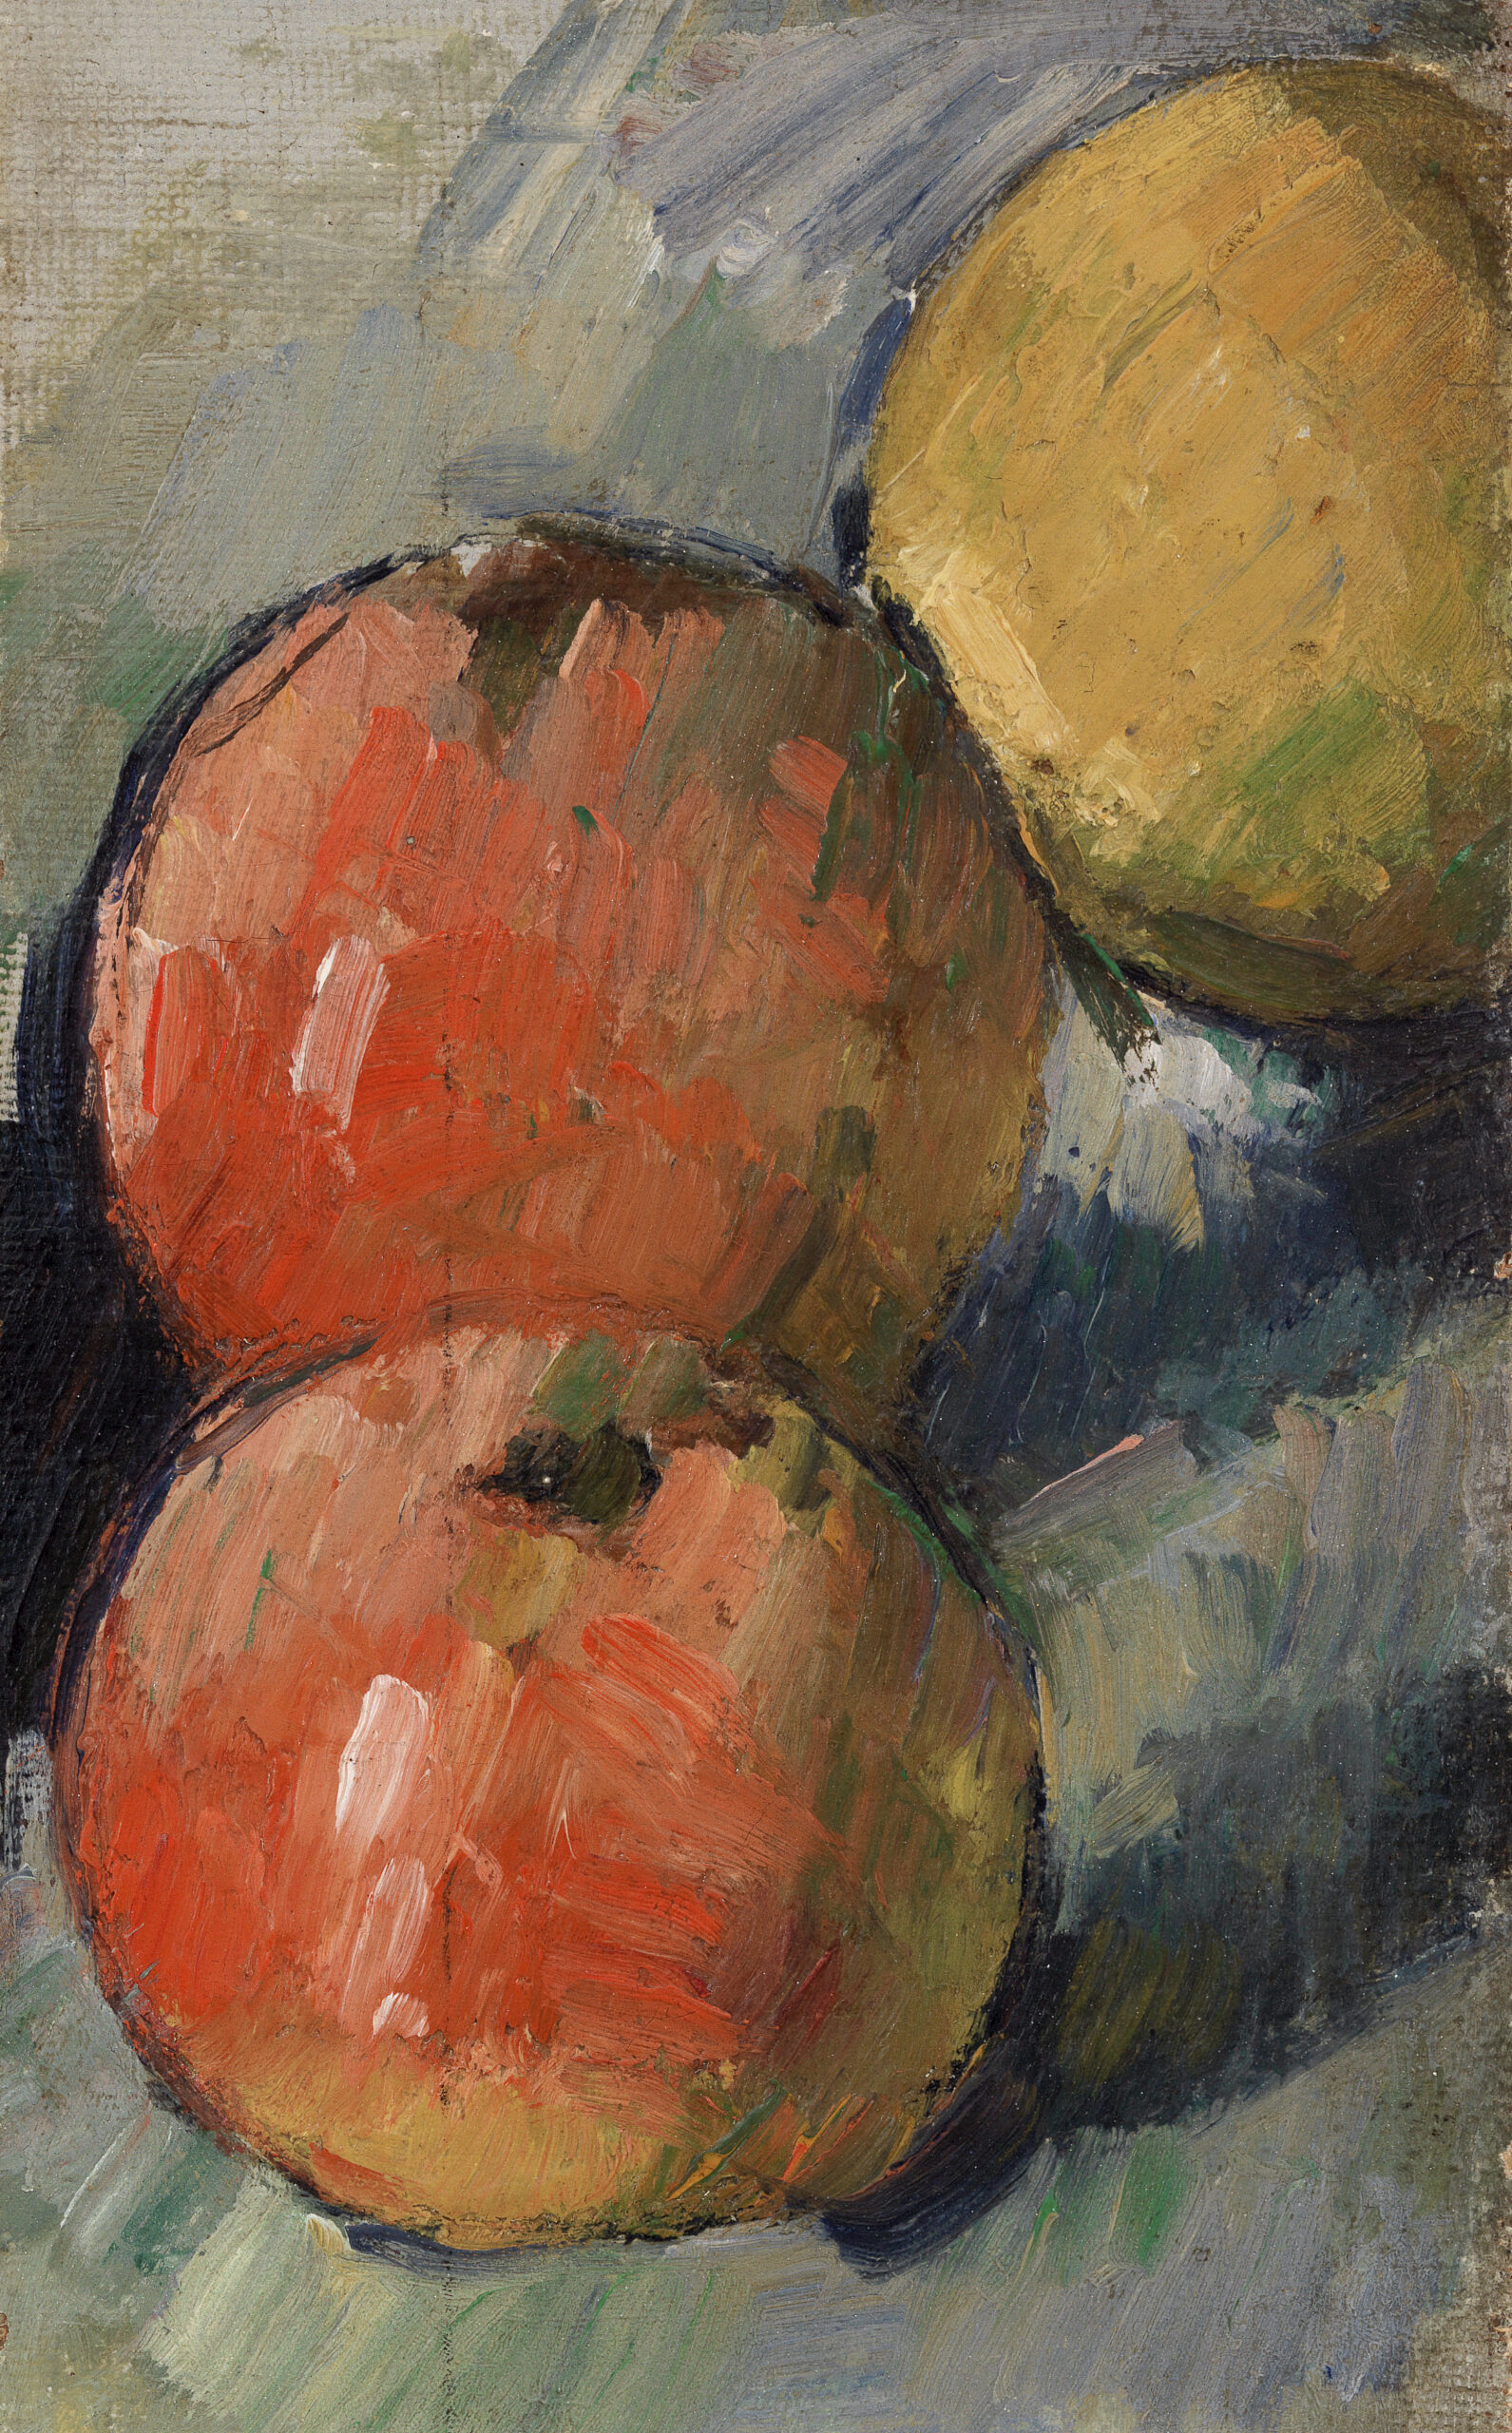 Three Apples (Deux pommes et demie) (ca. 1878–1879) by Paul Cézanne. Original from Original from Barnes Foundation.